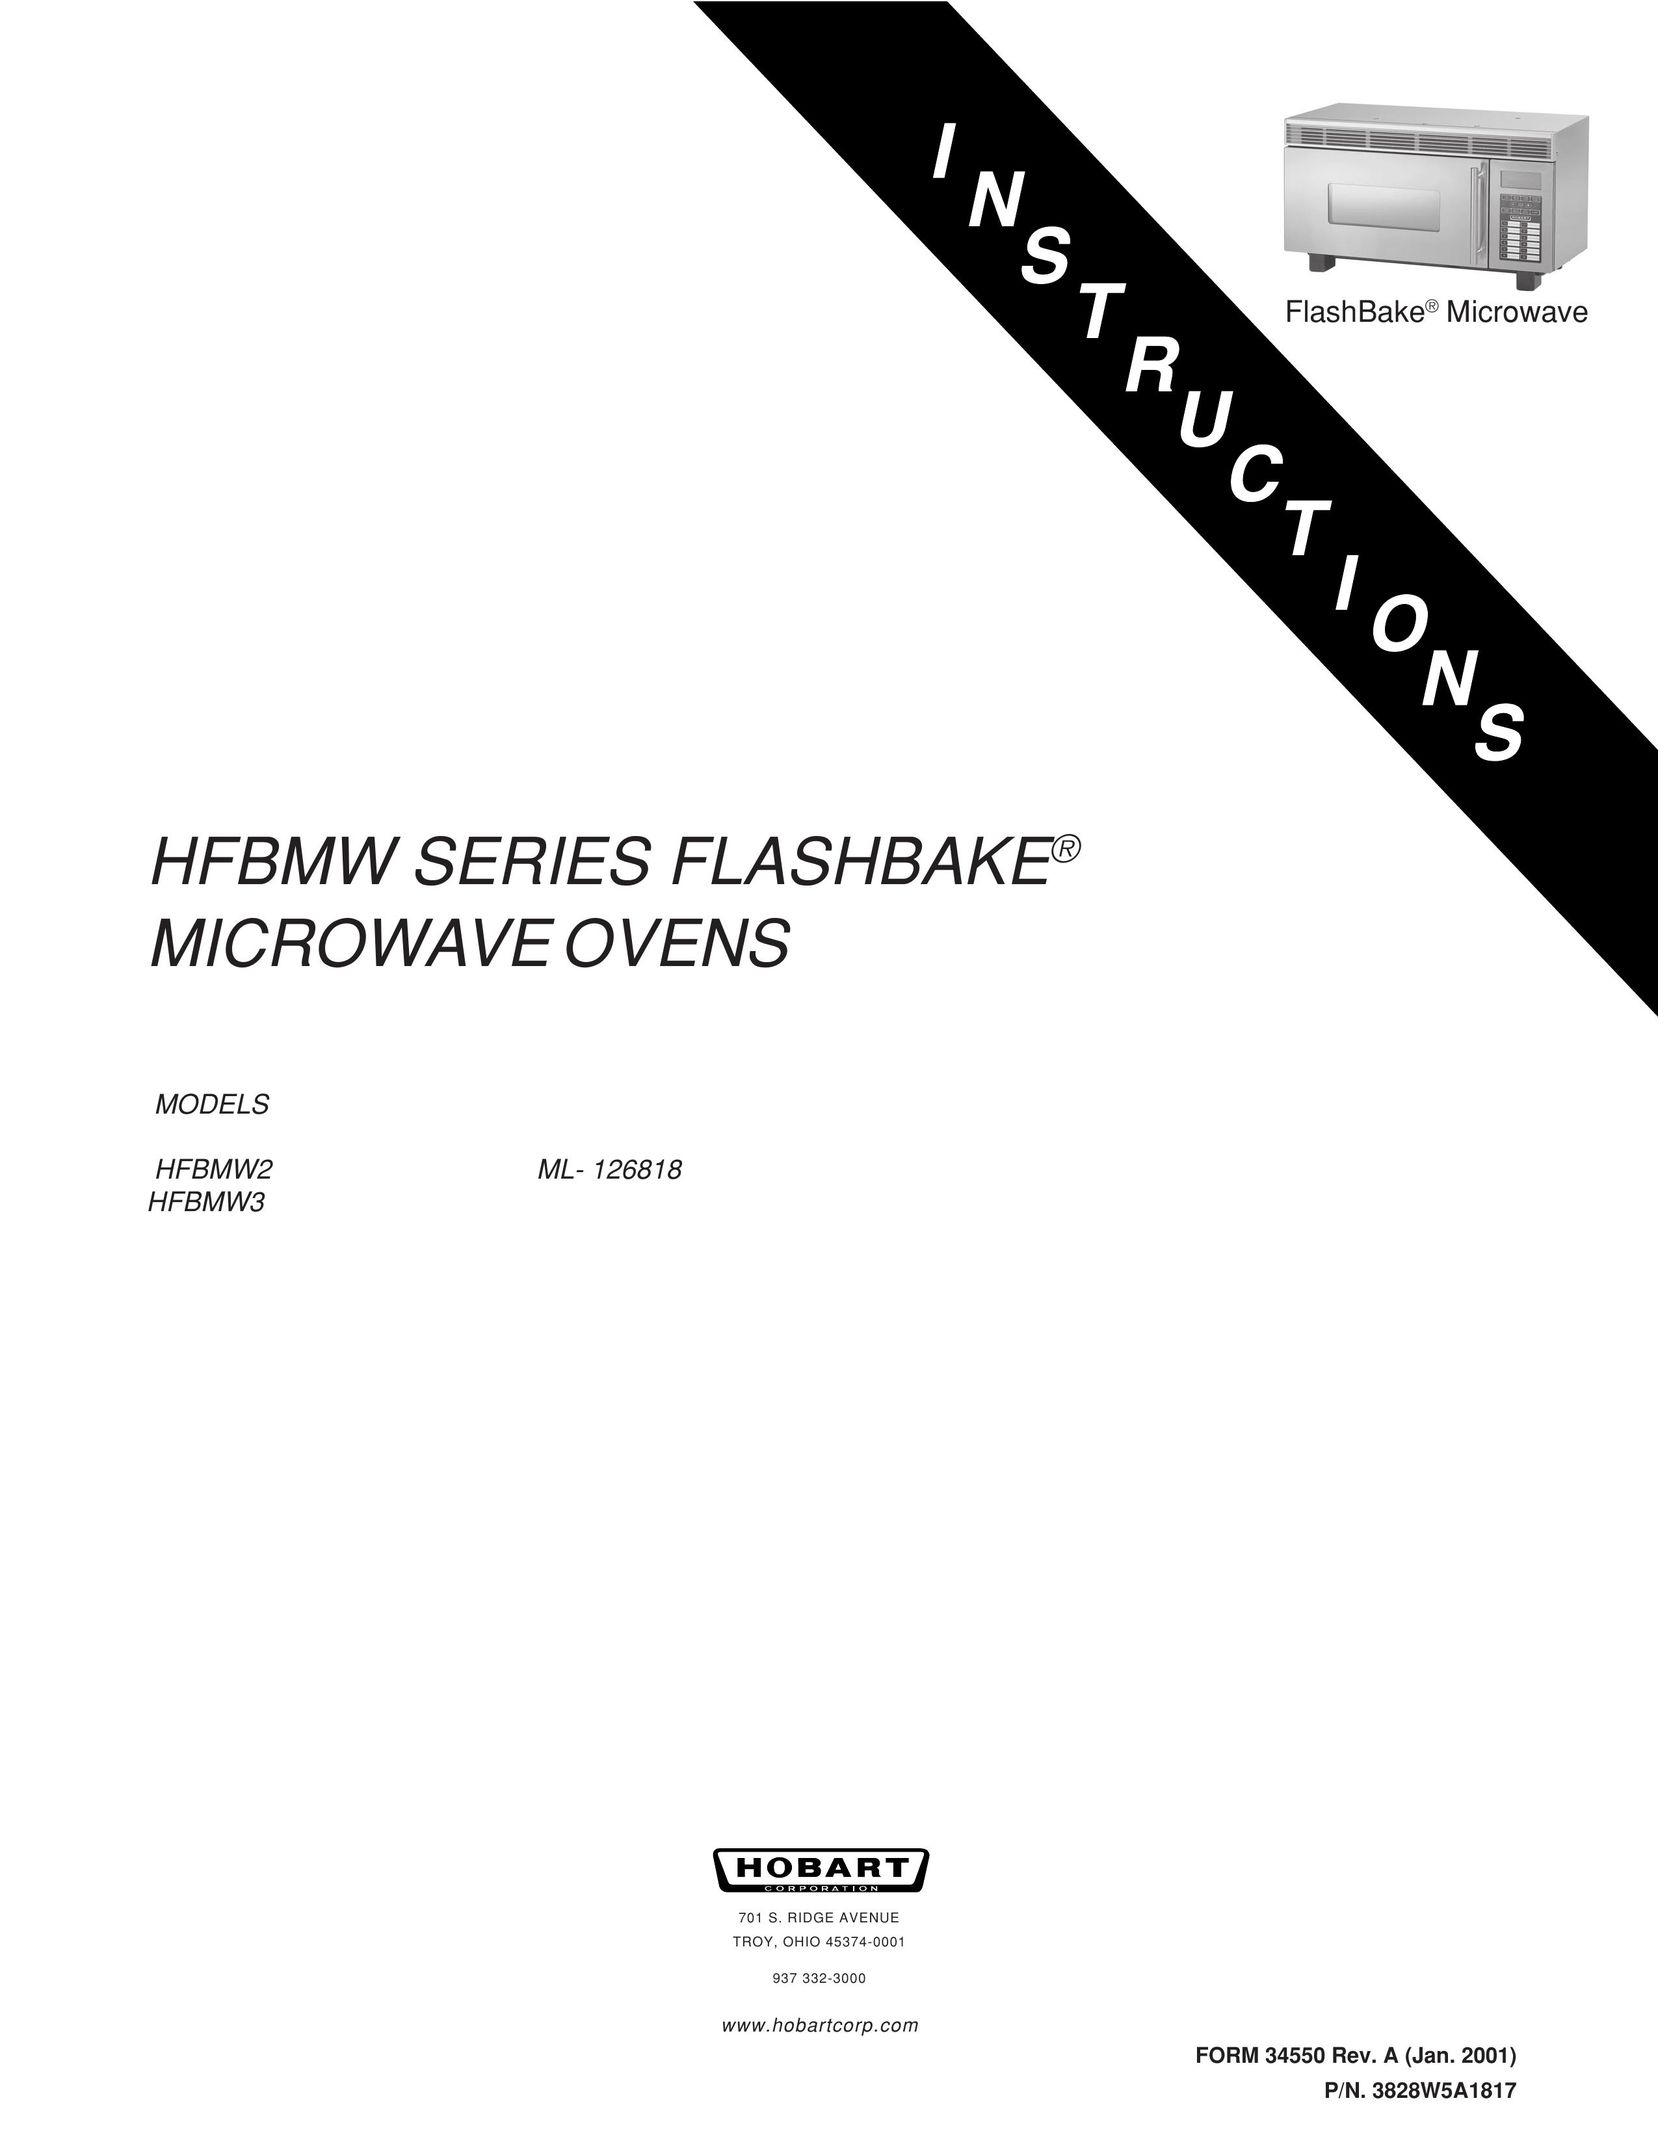 Hobart HFBMW2 ML-126818 Microwave Oven User Manual